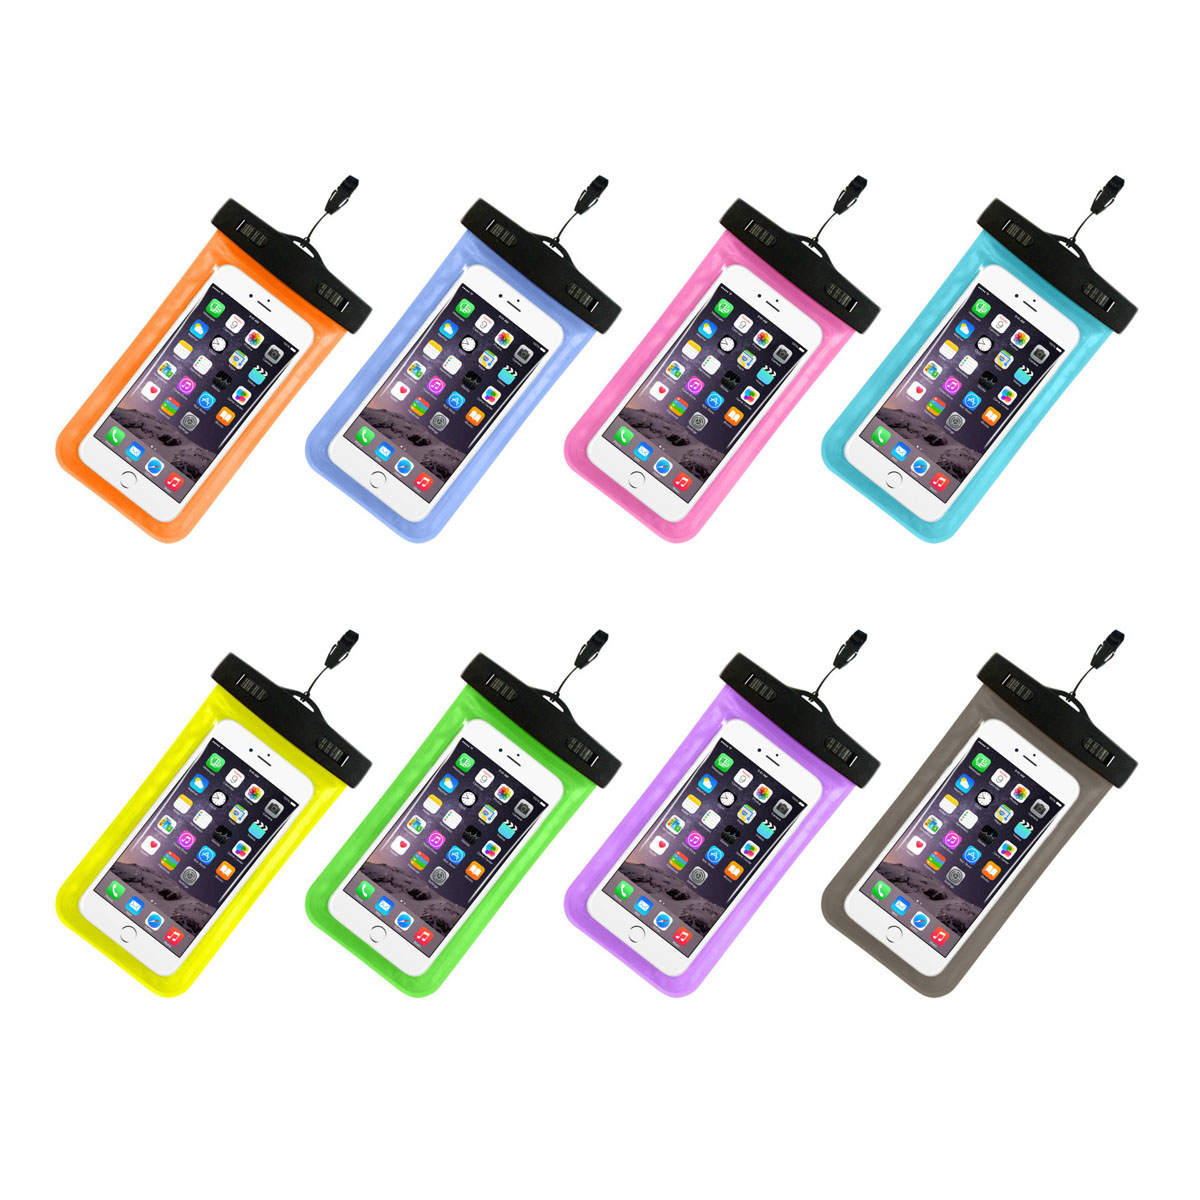 GL-AKL0085 Waterproof Universal Cell Phone Smartphone Pouch Bag